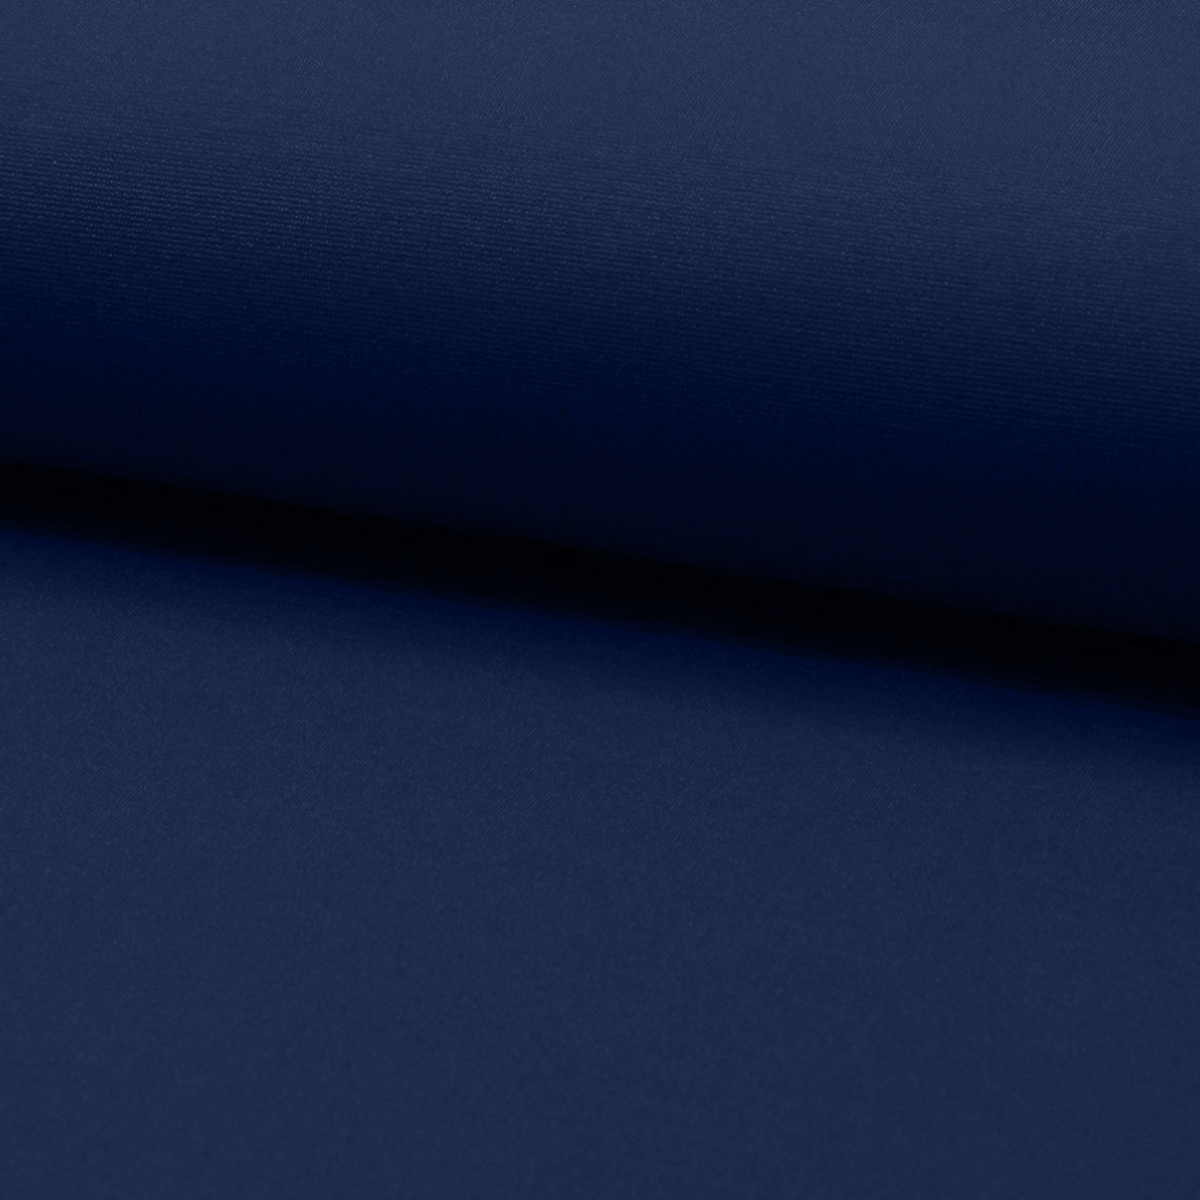 Viscose Romanit/Double Jersey 60%Vi , lapis lazuli blue